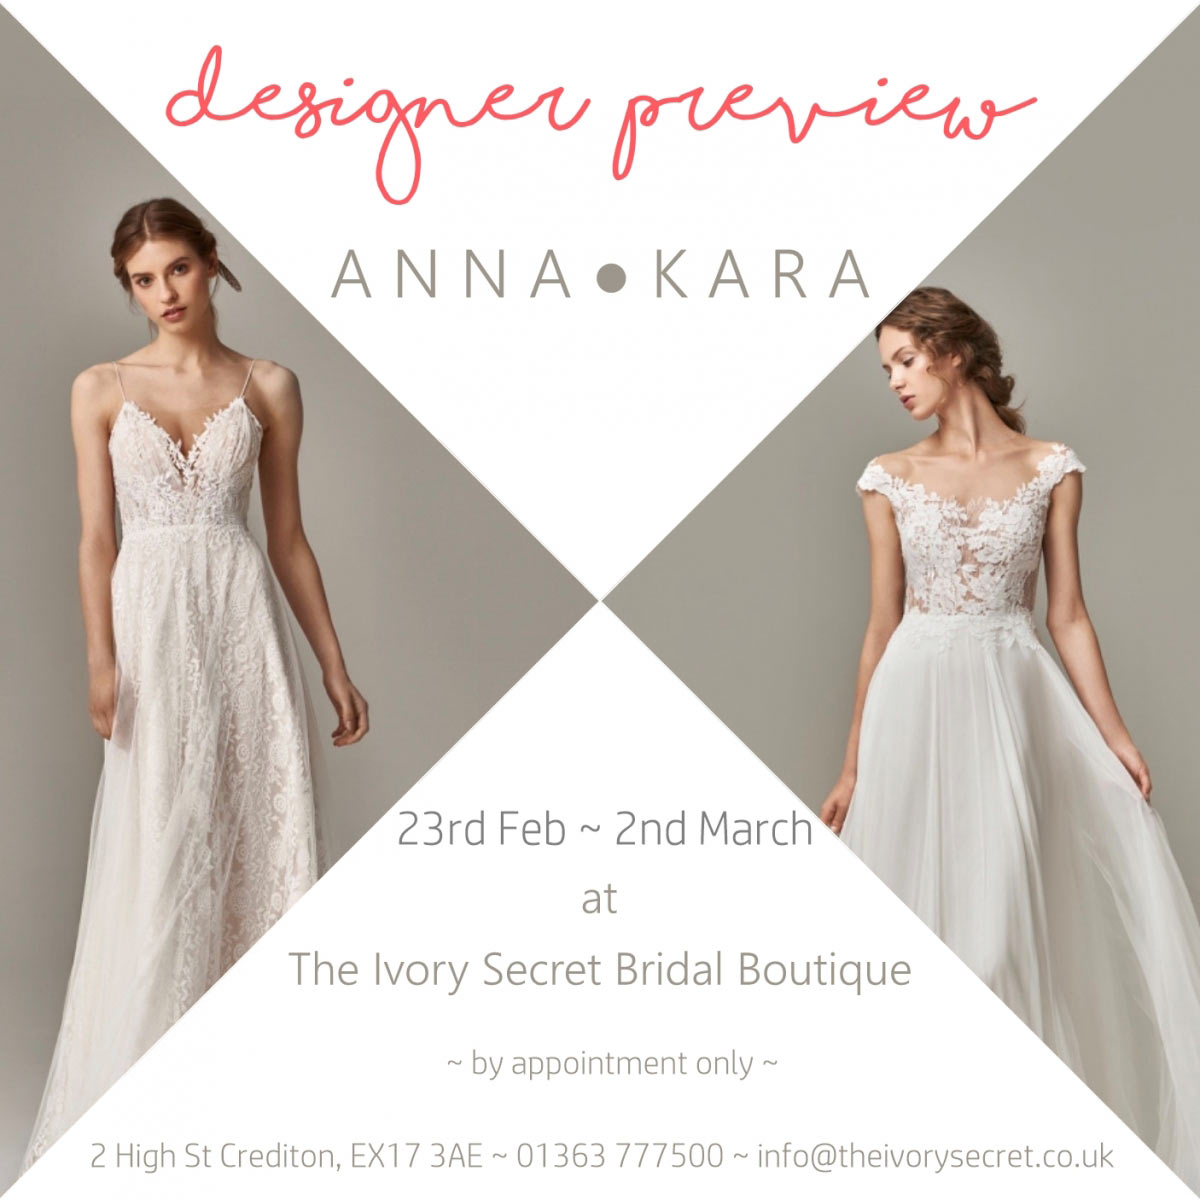 Anna Kara Designer Preview at The Ivory Secret